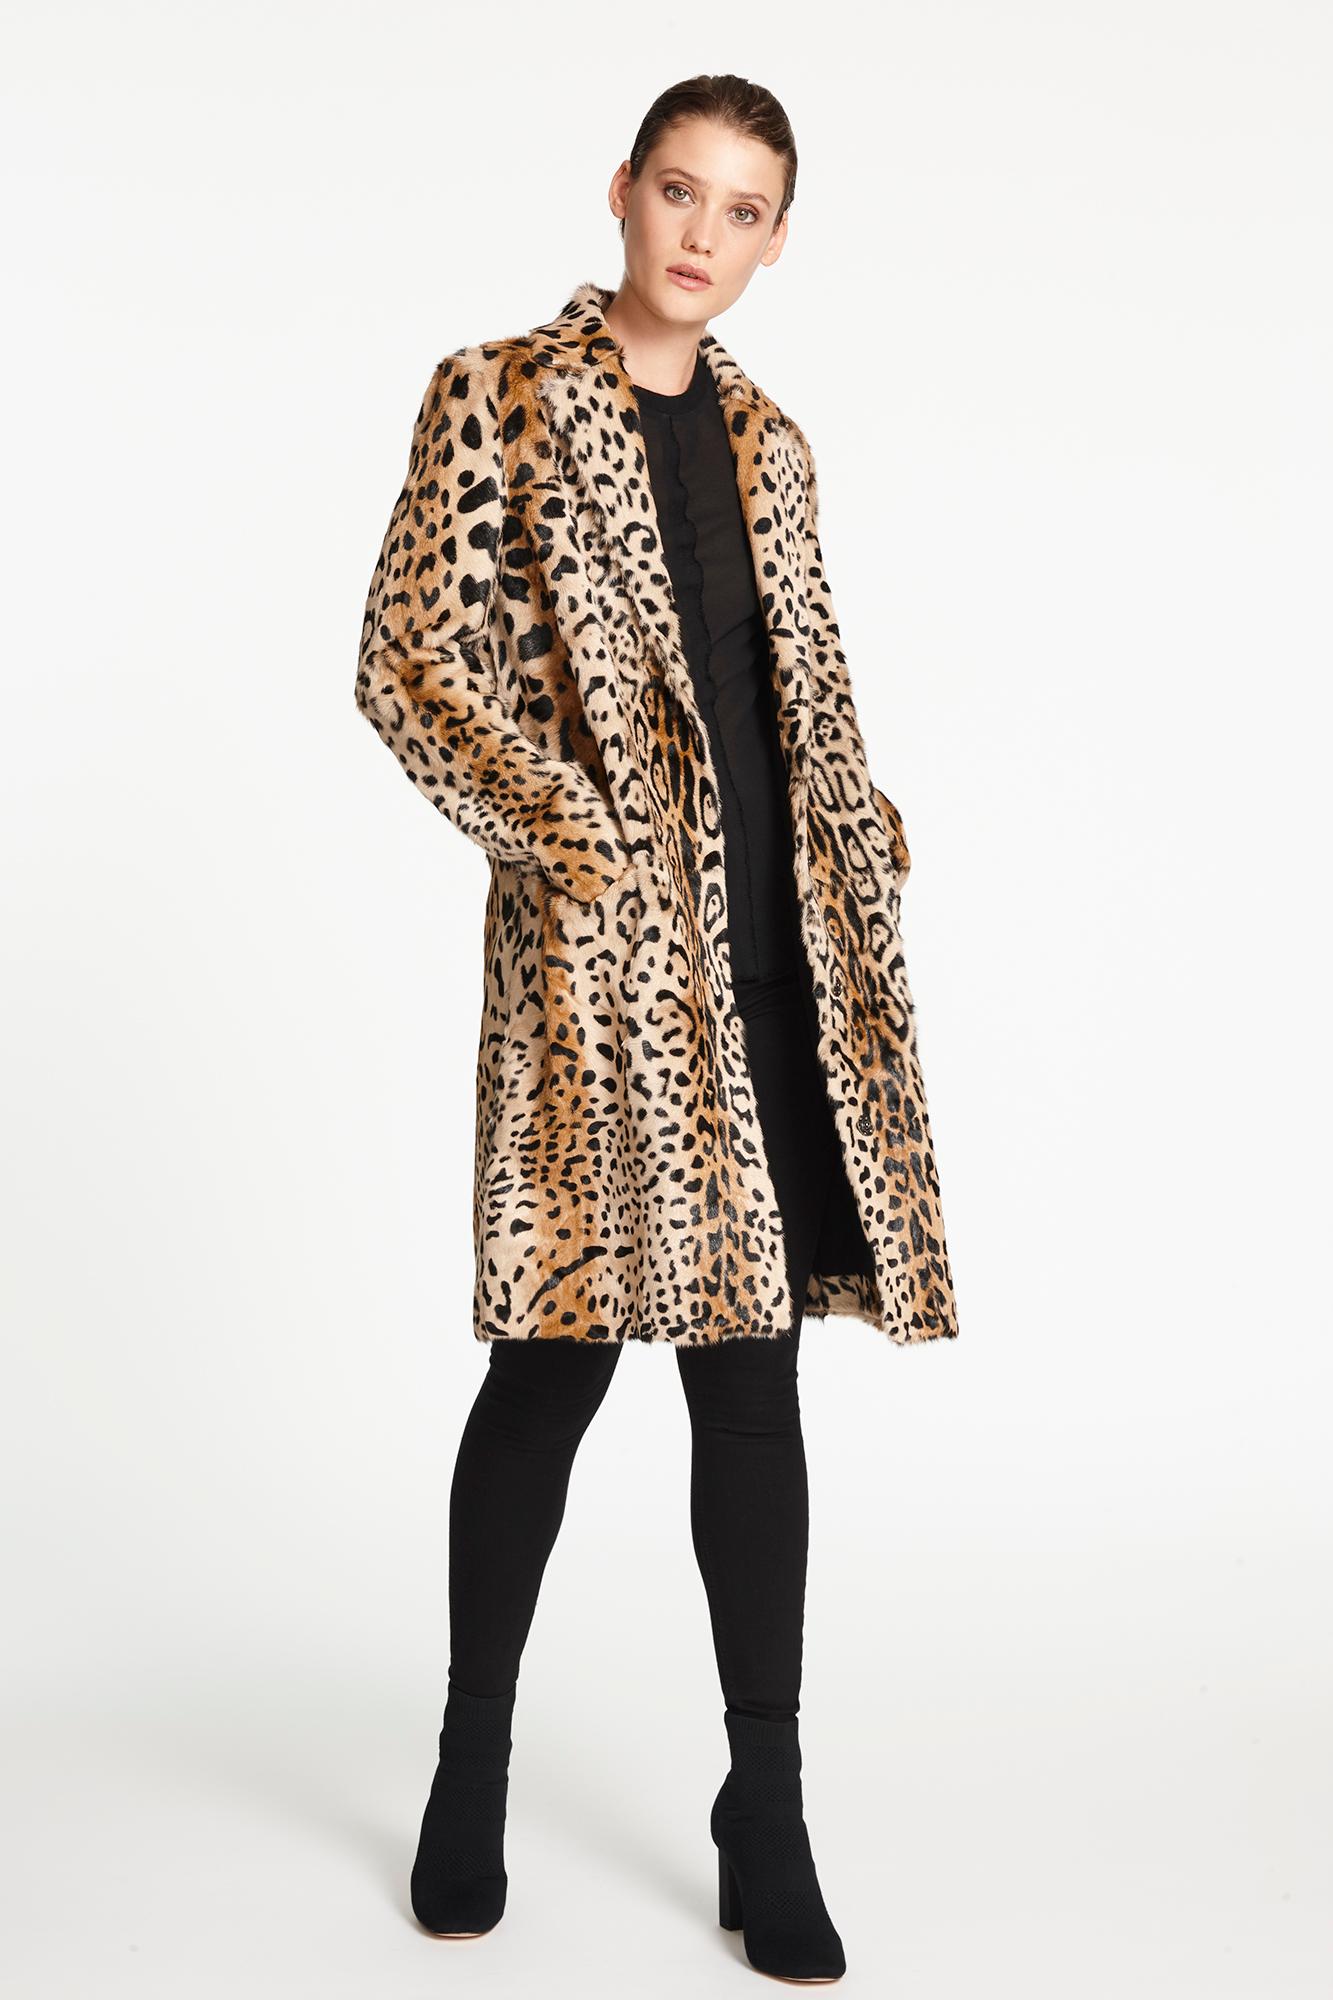 Verheyen London Leopard Print Coat in Red Ruby Goat Hair Fur UK 10 - Brand New  4